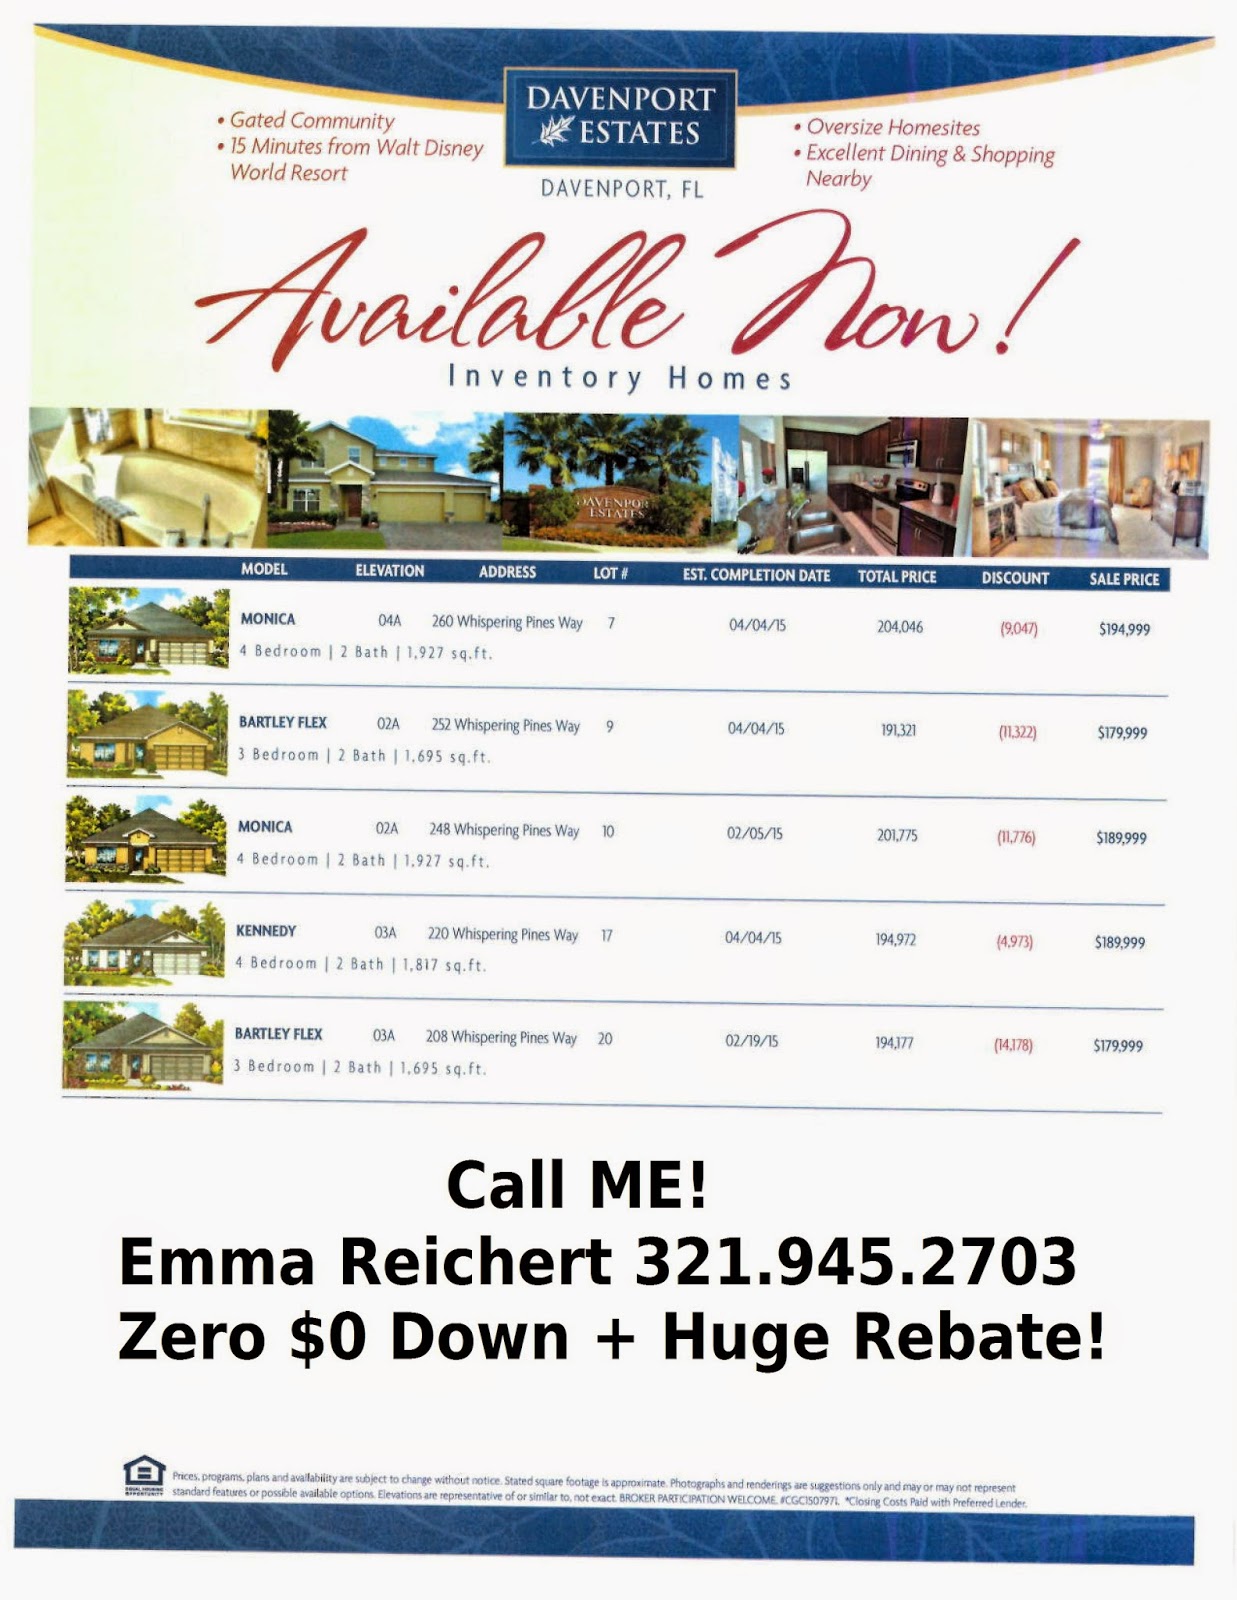 davenport-homes-with-huge-rebates-and-zero-0-down-florida-new